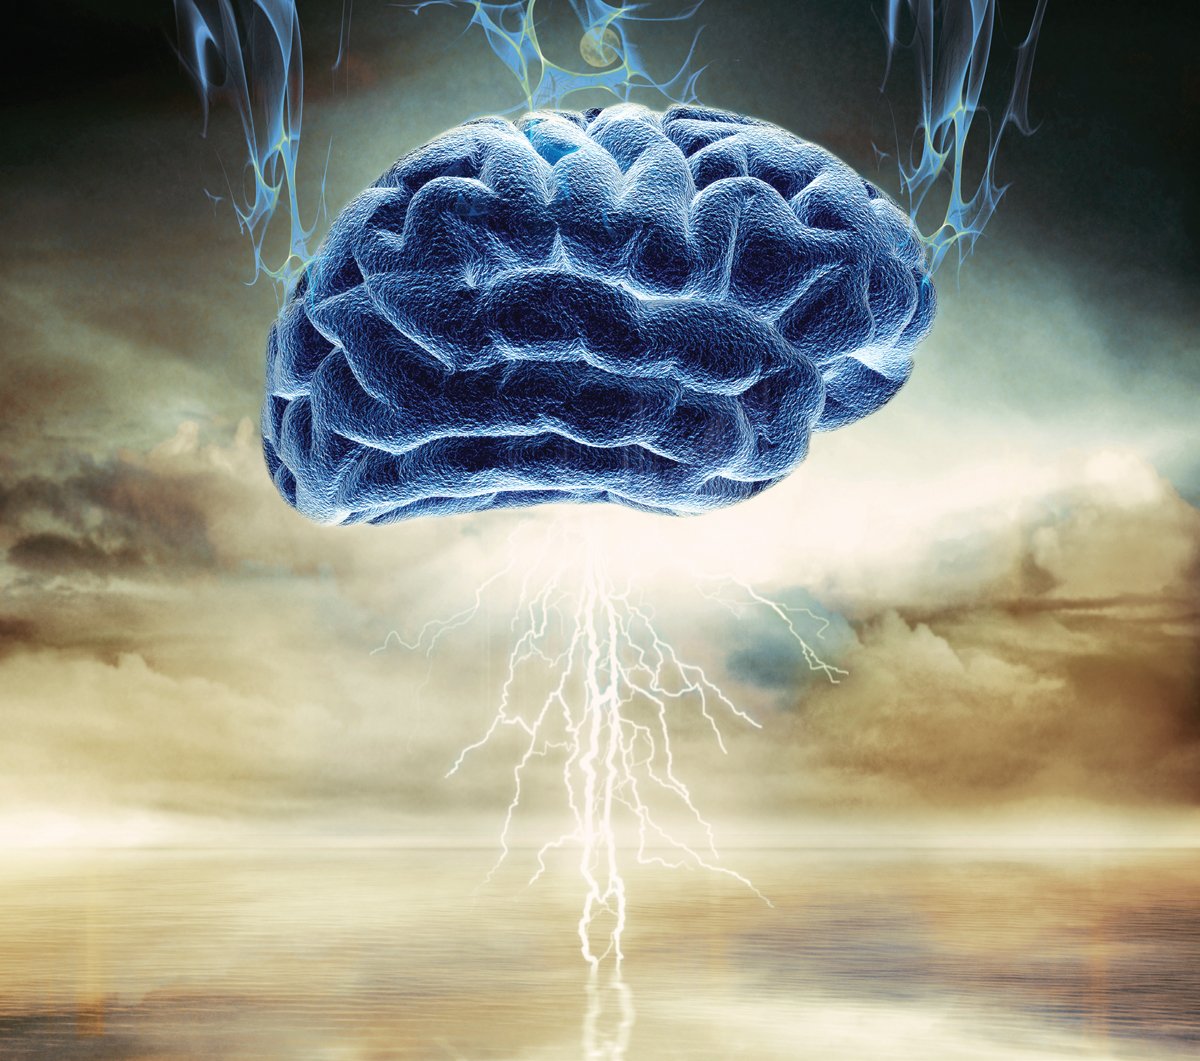 Brain storm, lightening, Feb 13, p96